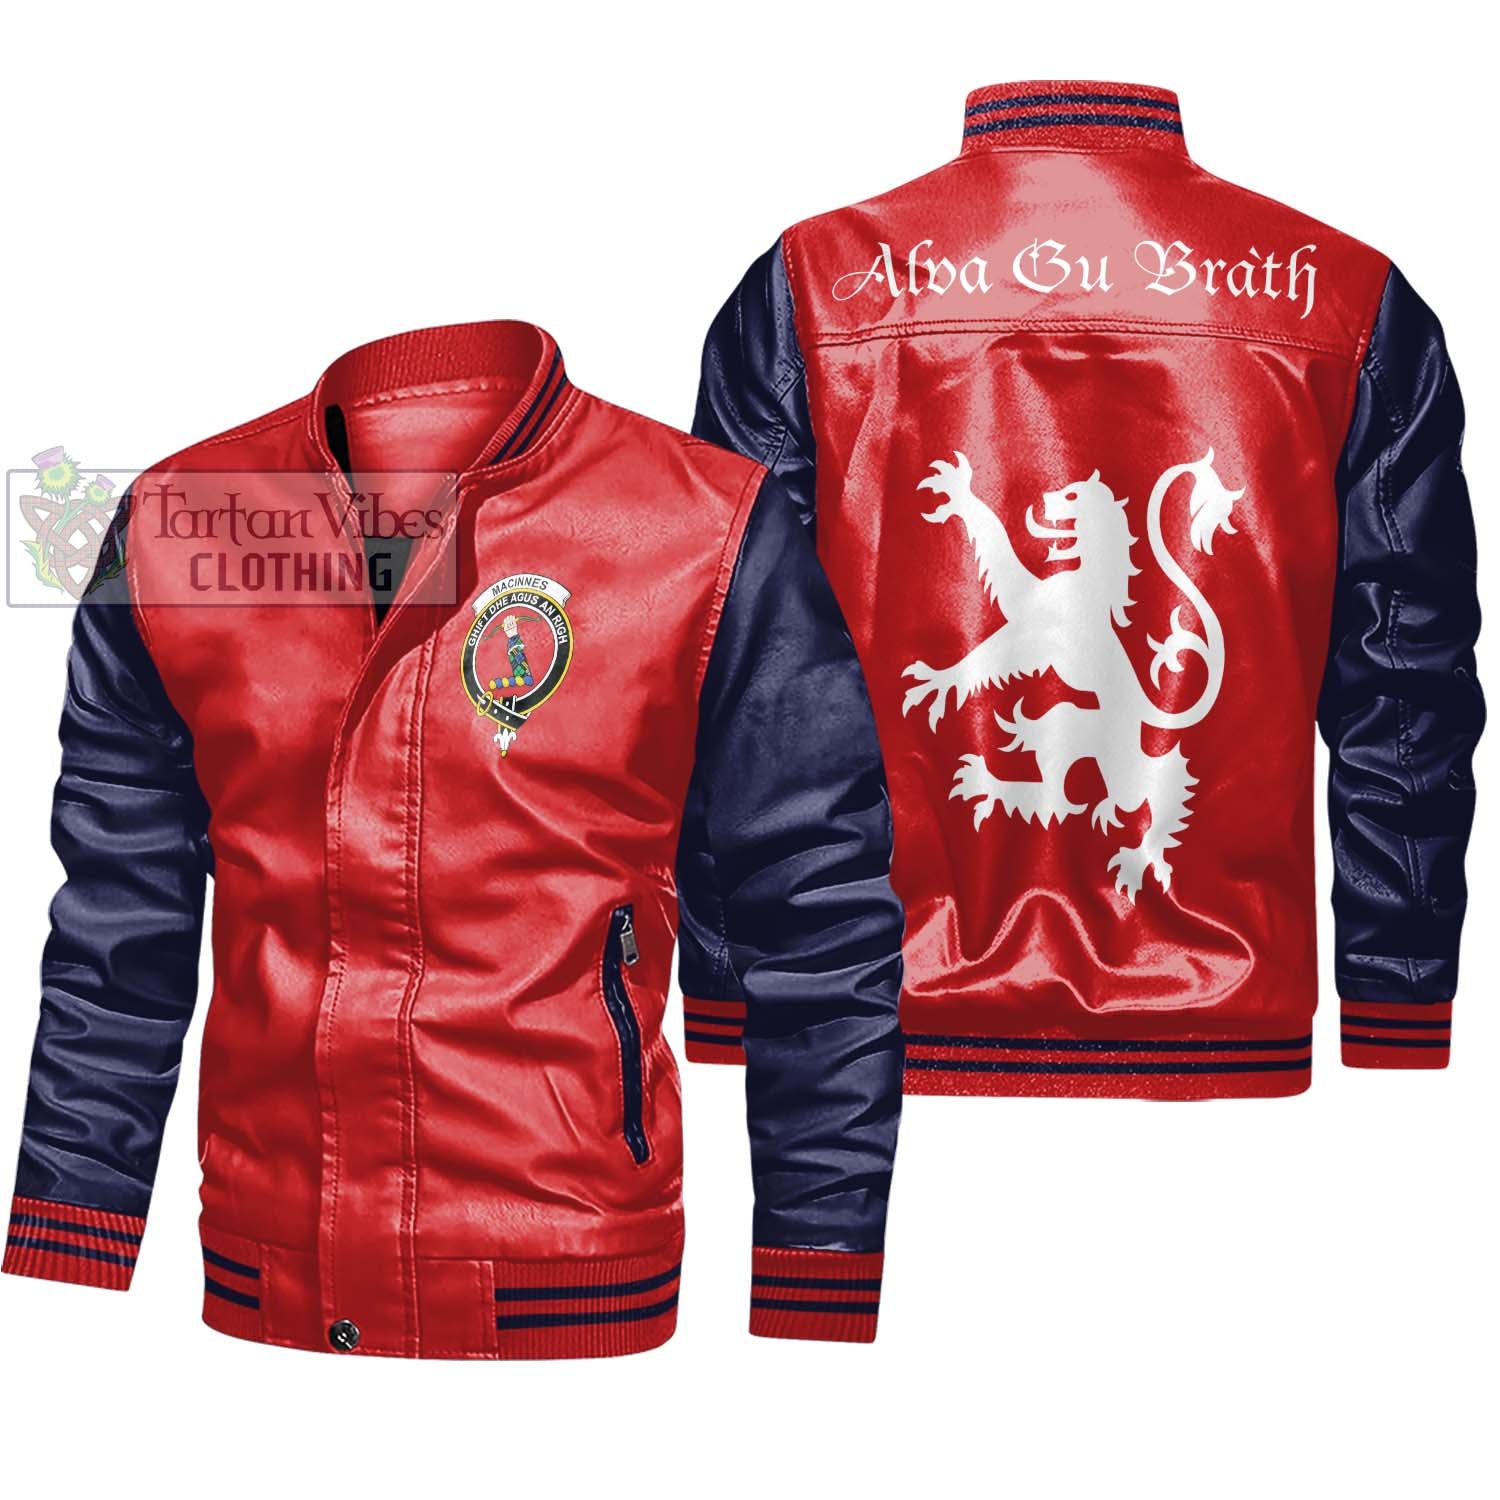 Tartan Vibes Clothing MacInnes Family Crest Leather Bomber Jacket Lion Rampant Alba Gu Brath Style